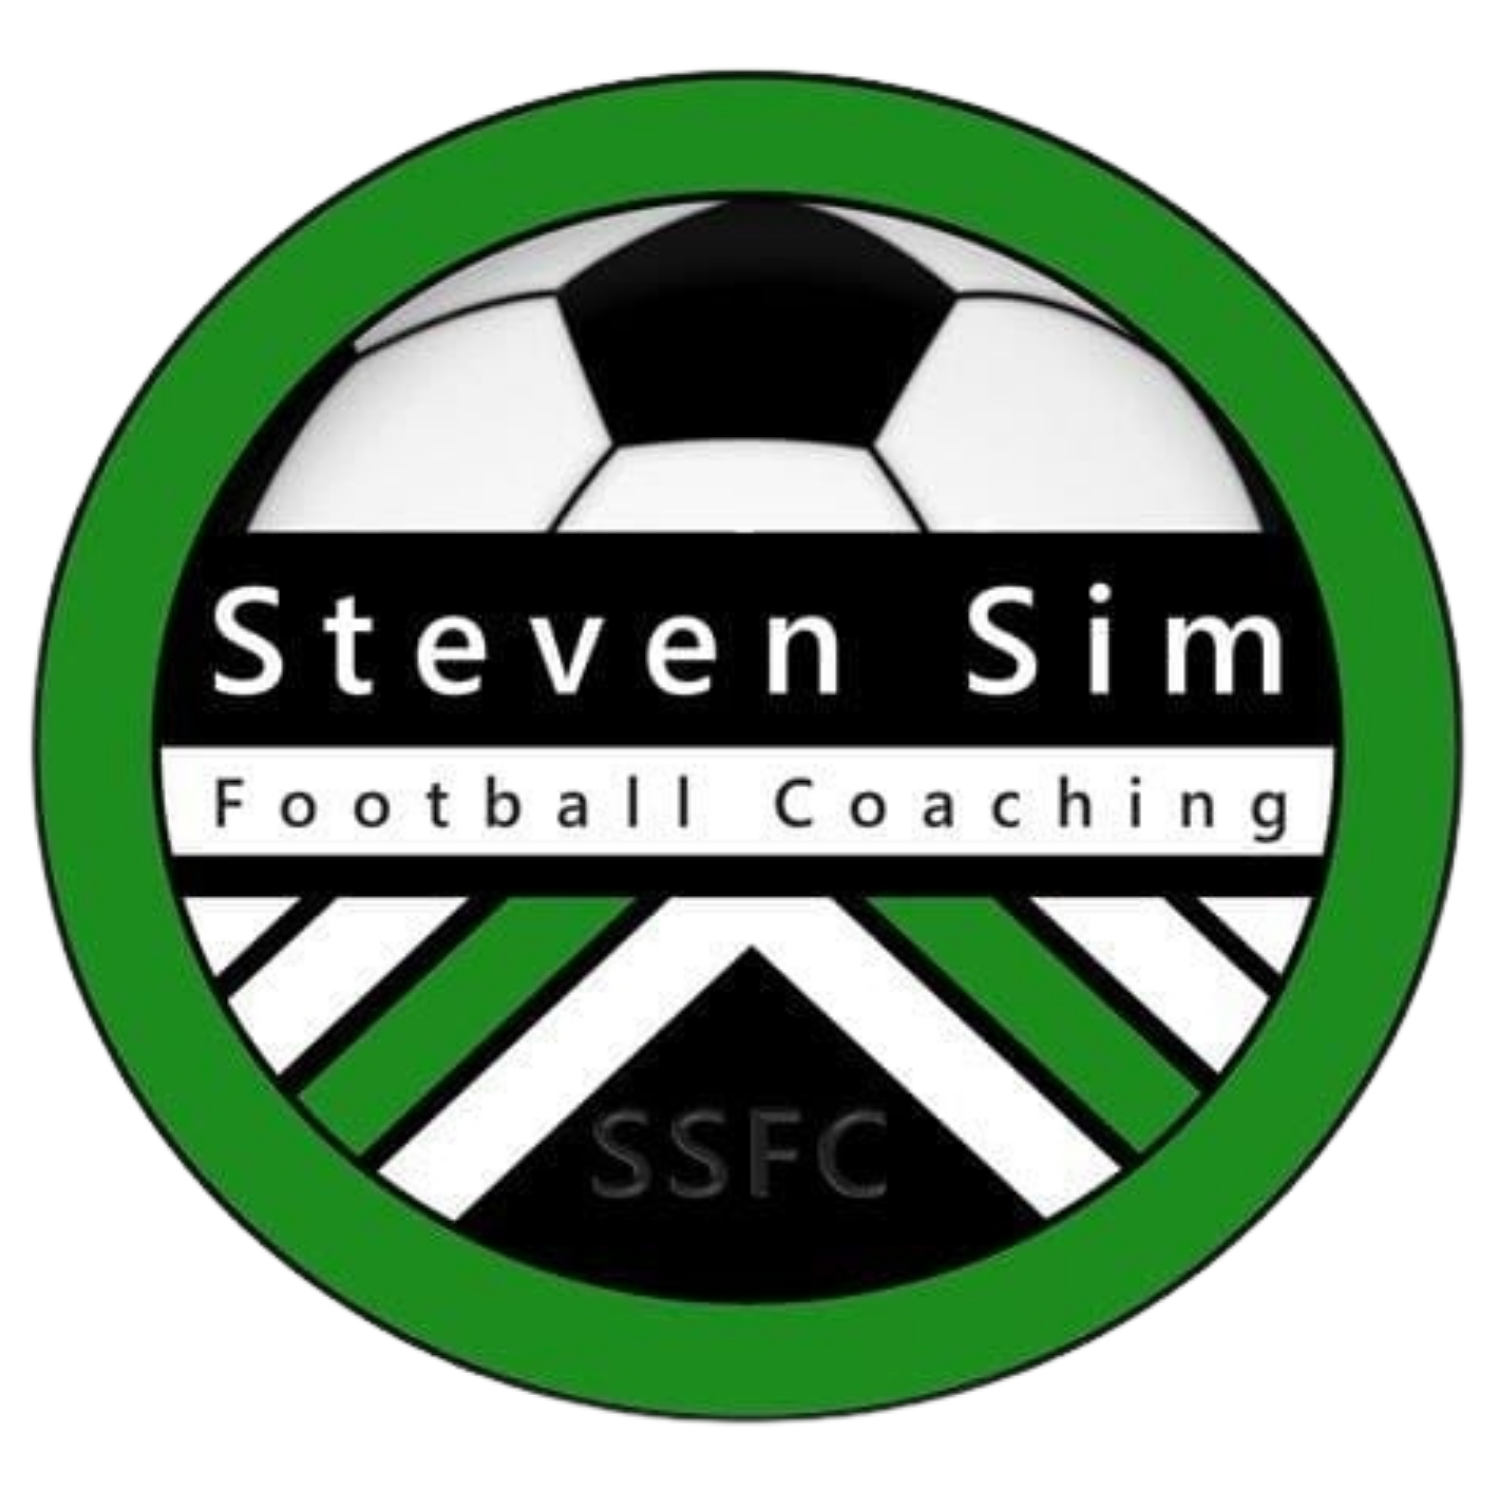 Steven Sim Football